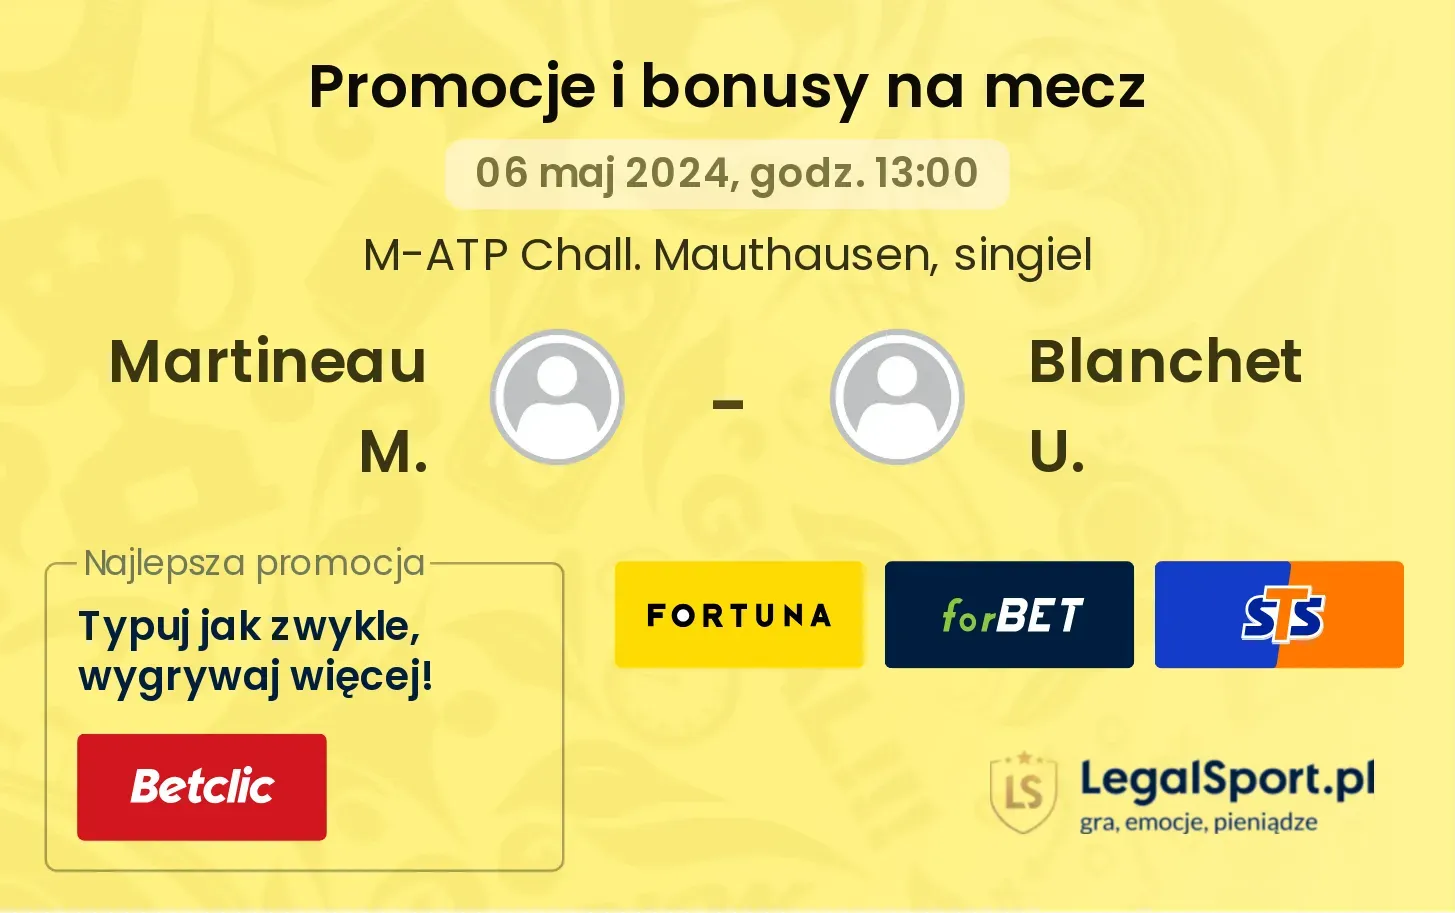 Martineau M. - Blanchet U. promocje bonusy na mecz